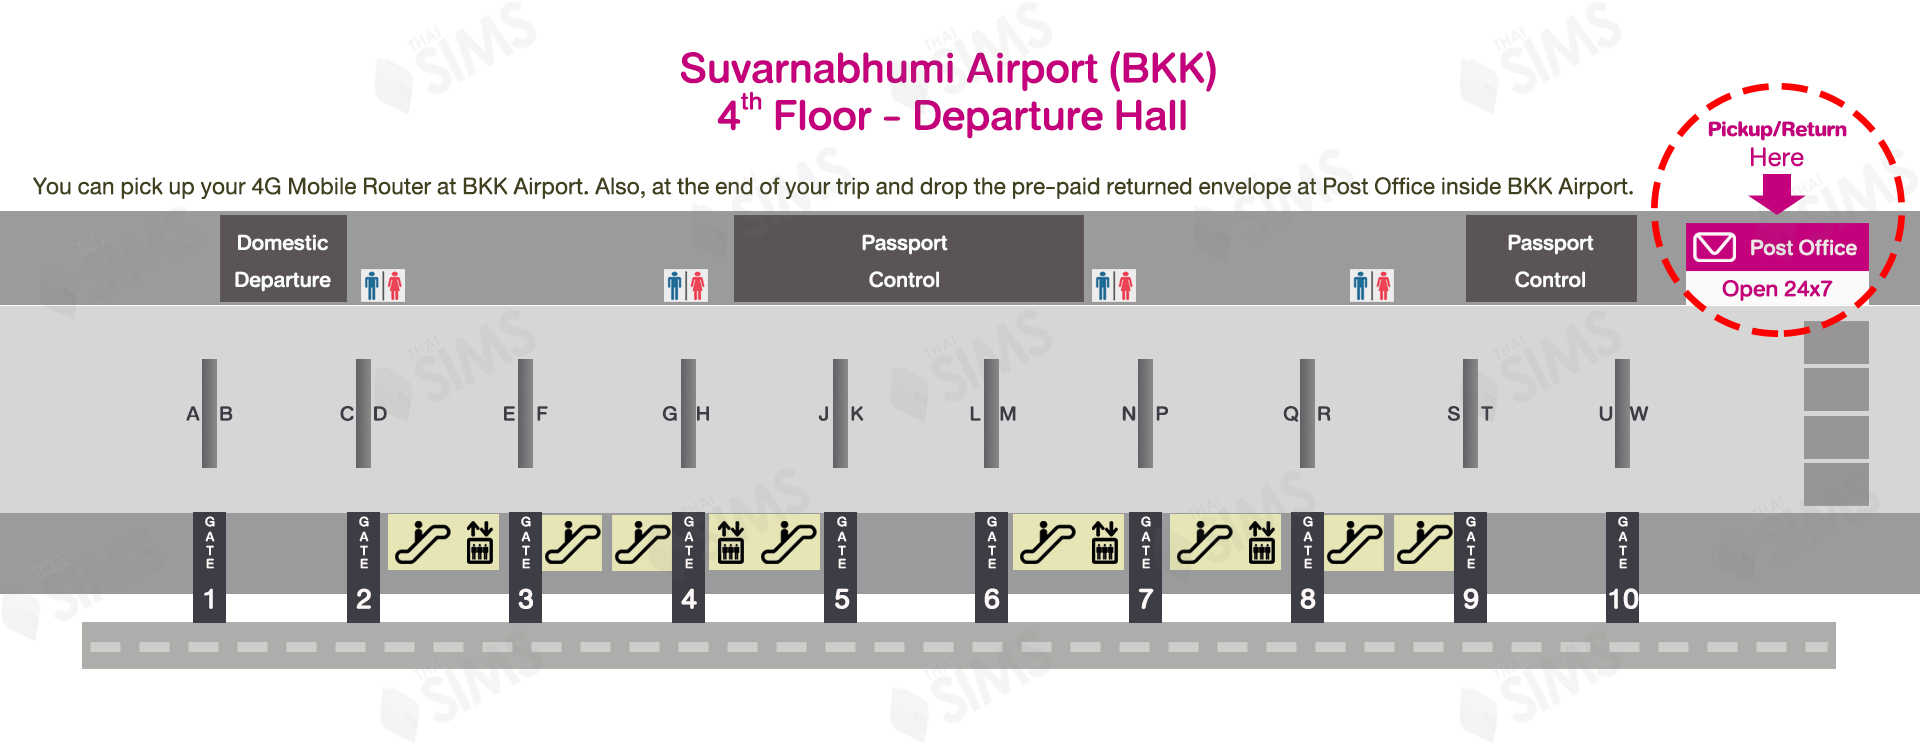 BKK Airport for Pickup and Return